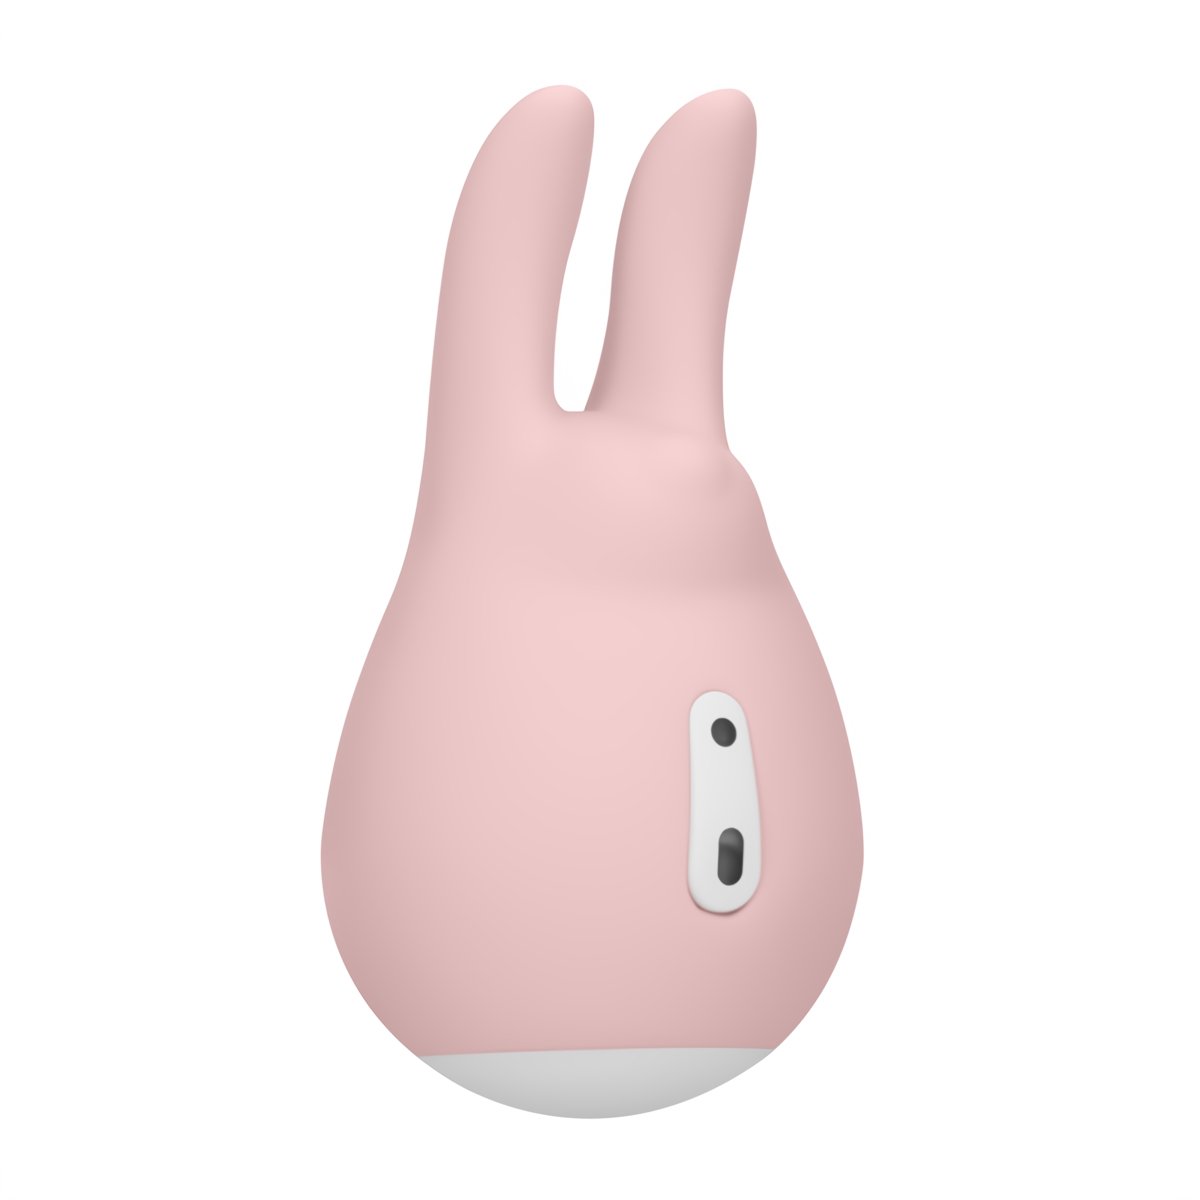 Love Bunny - Clitoral Stimulator - EroticToyzProducten,Toys,Vibrators,Clitoris Stimulator,Tip Vibrator,,VrouwelijkLoveline by Shots